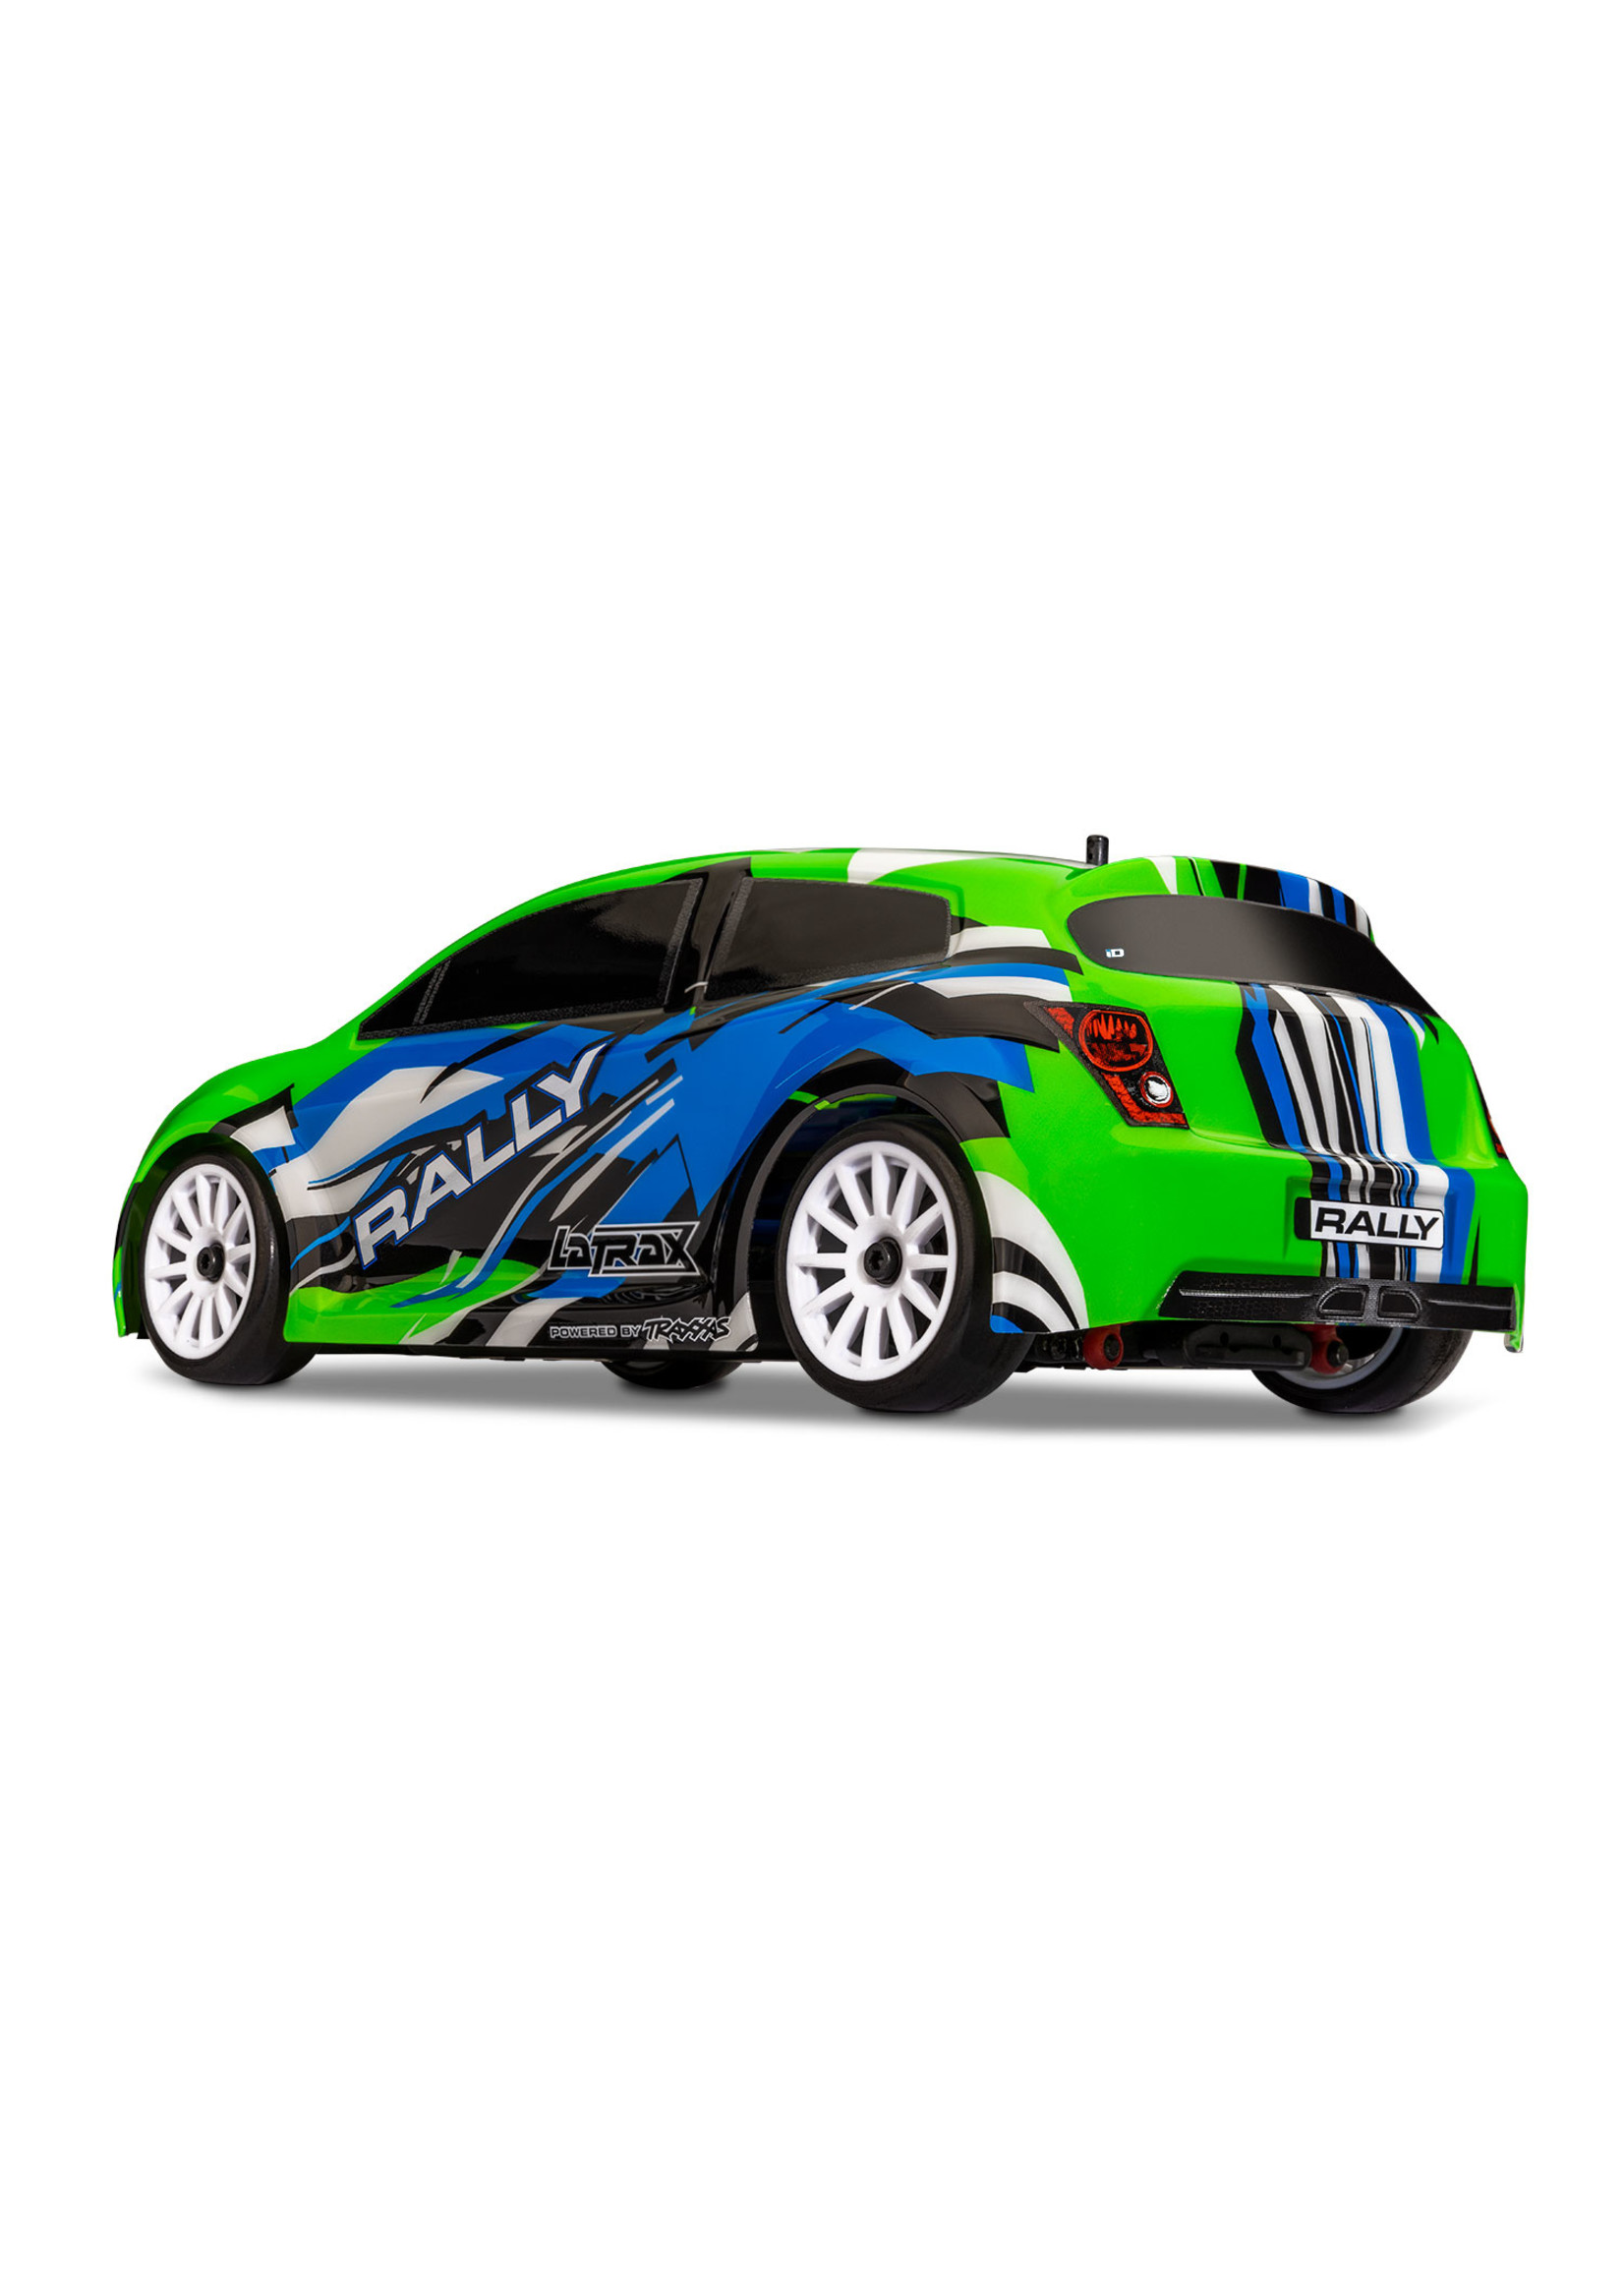 Traxxas 1/18 LaTrax 4WD RTR Rally Car - Greenx